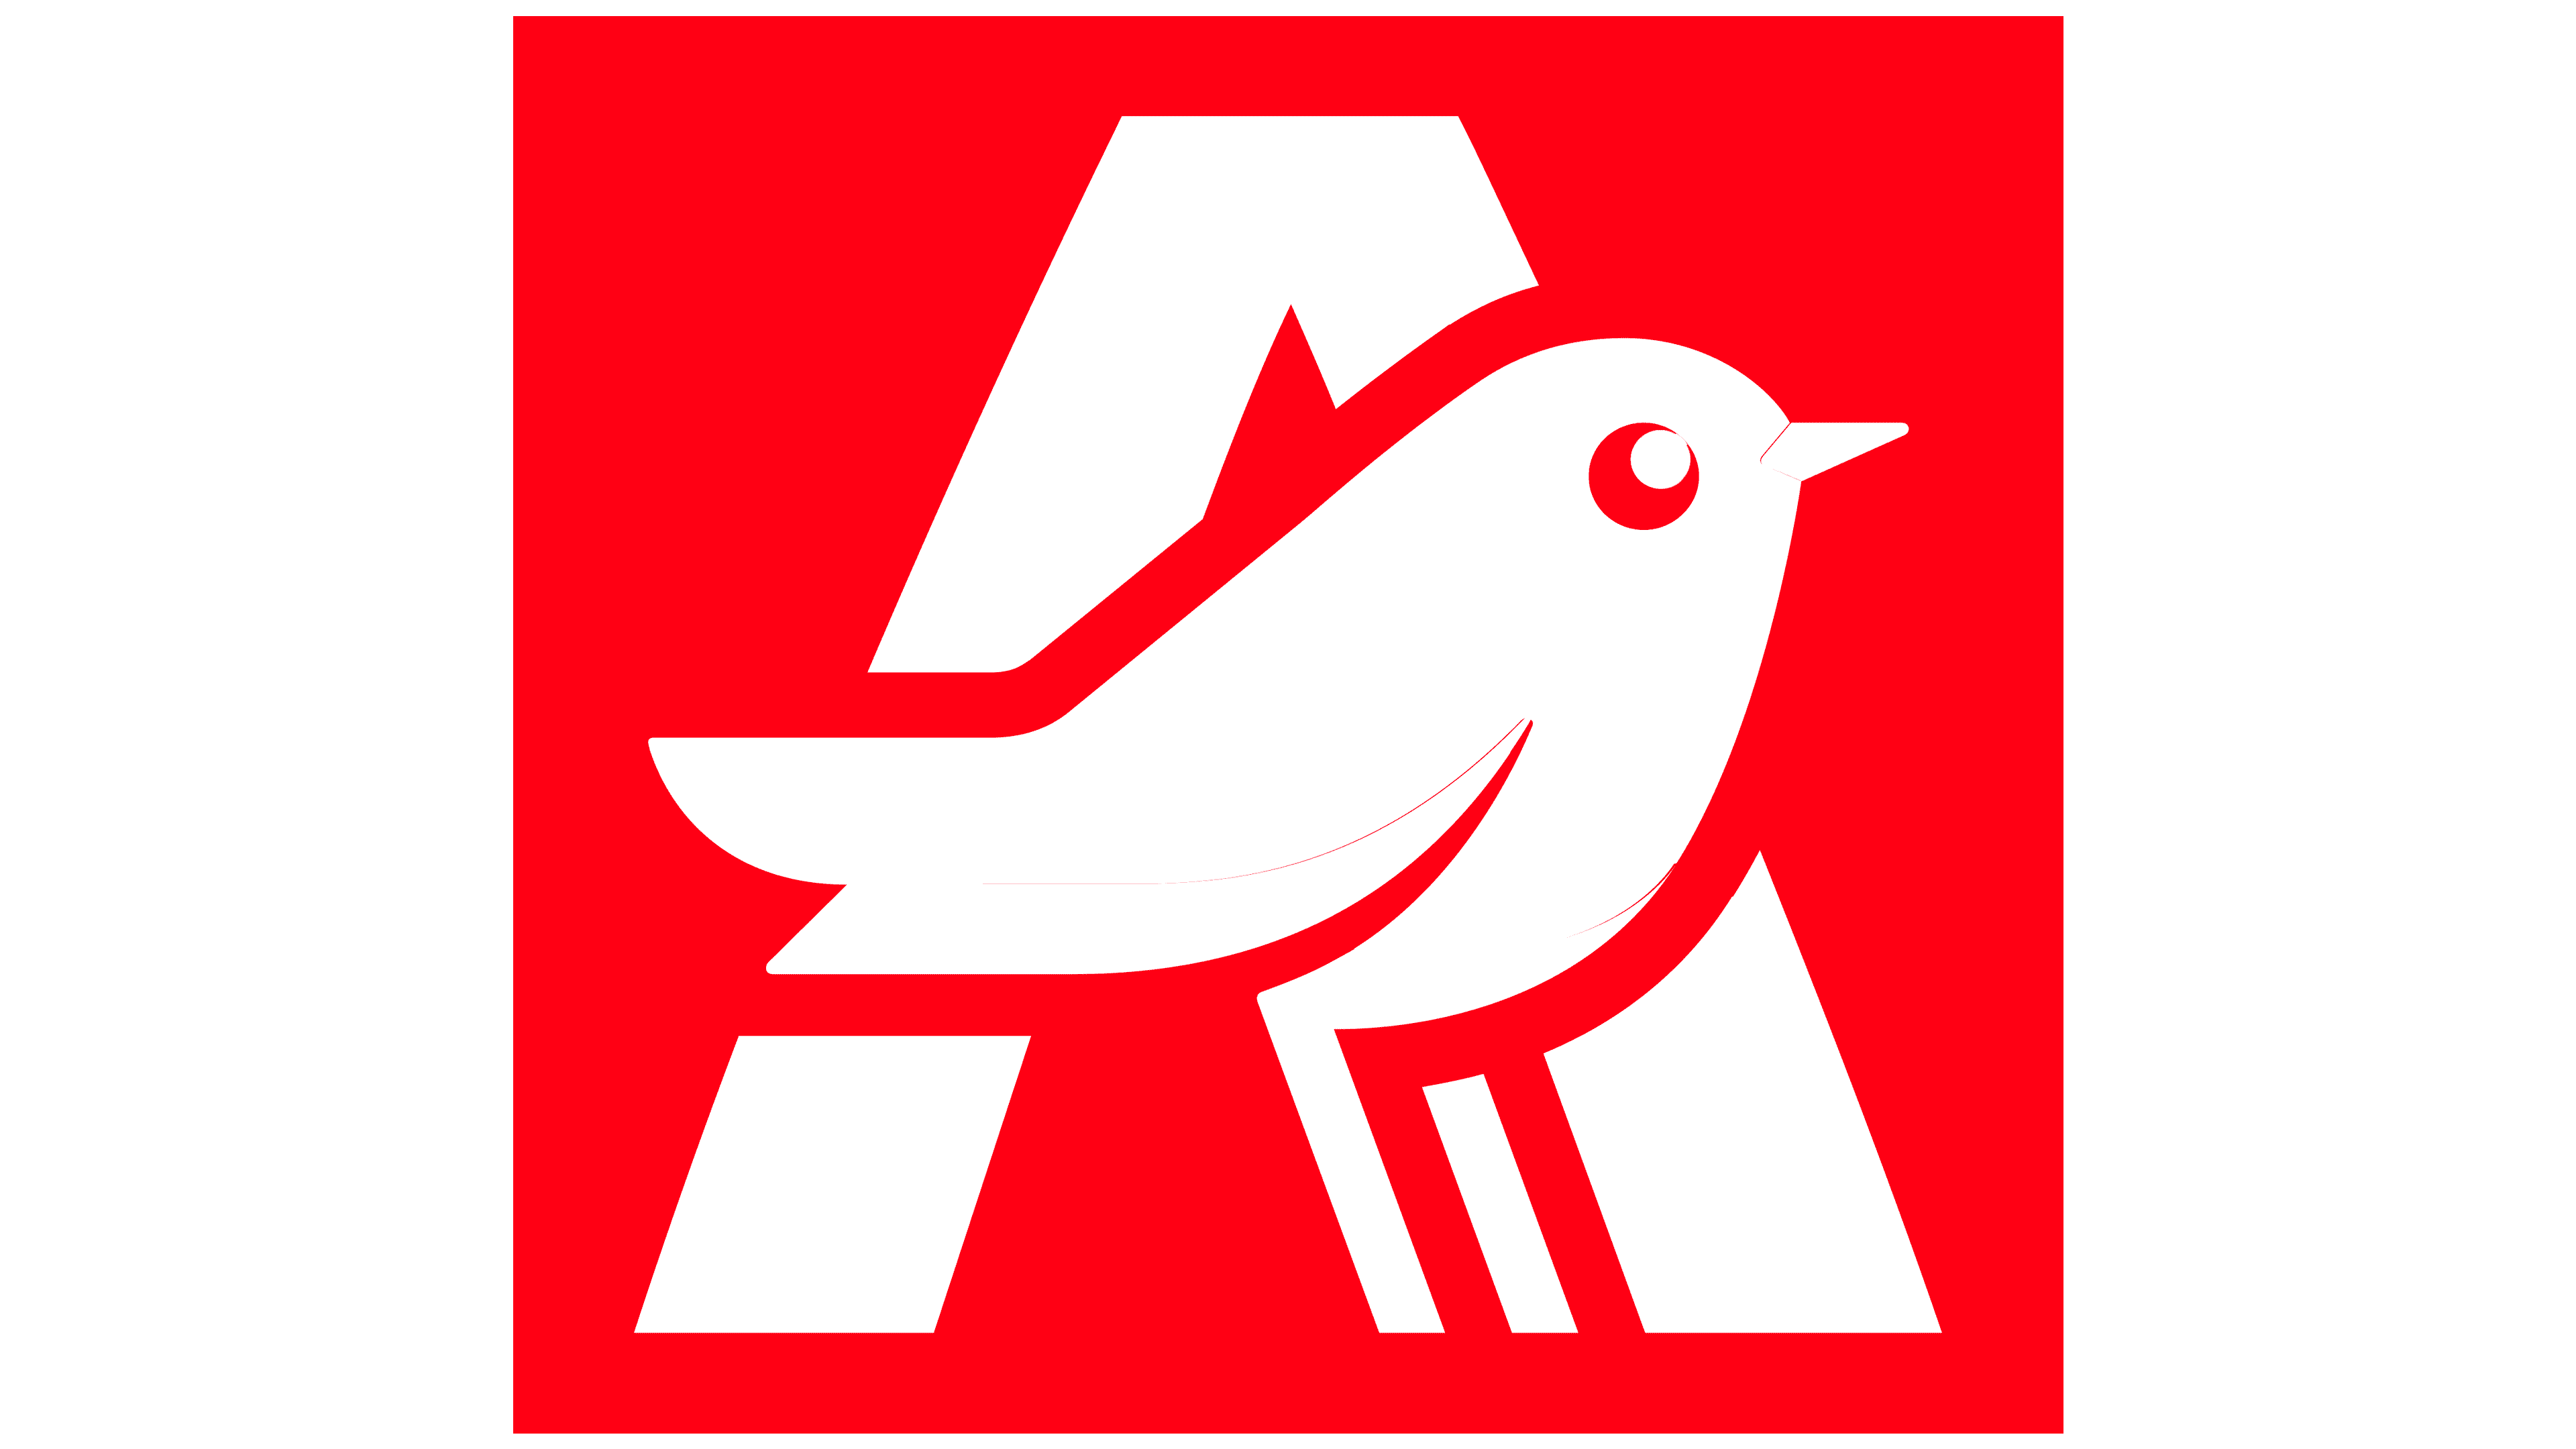 Auchan logo. Ашан логотип. Птичка Ашан. Логотип Ашан птичка. Ашфелоготип.